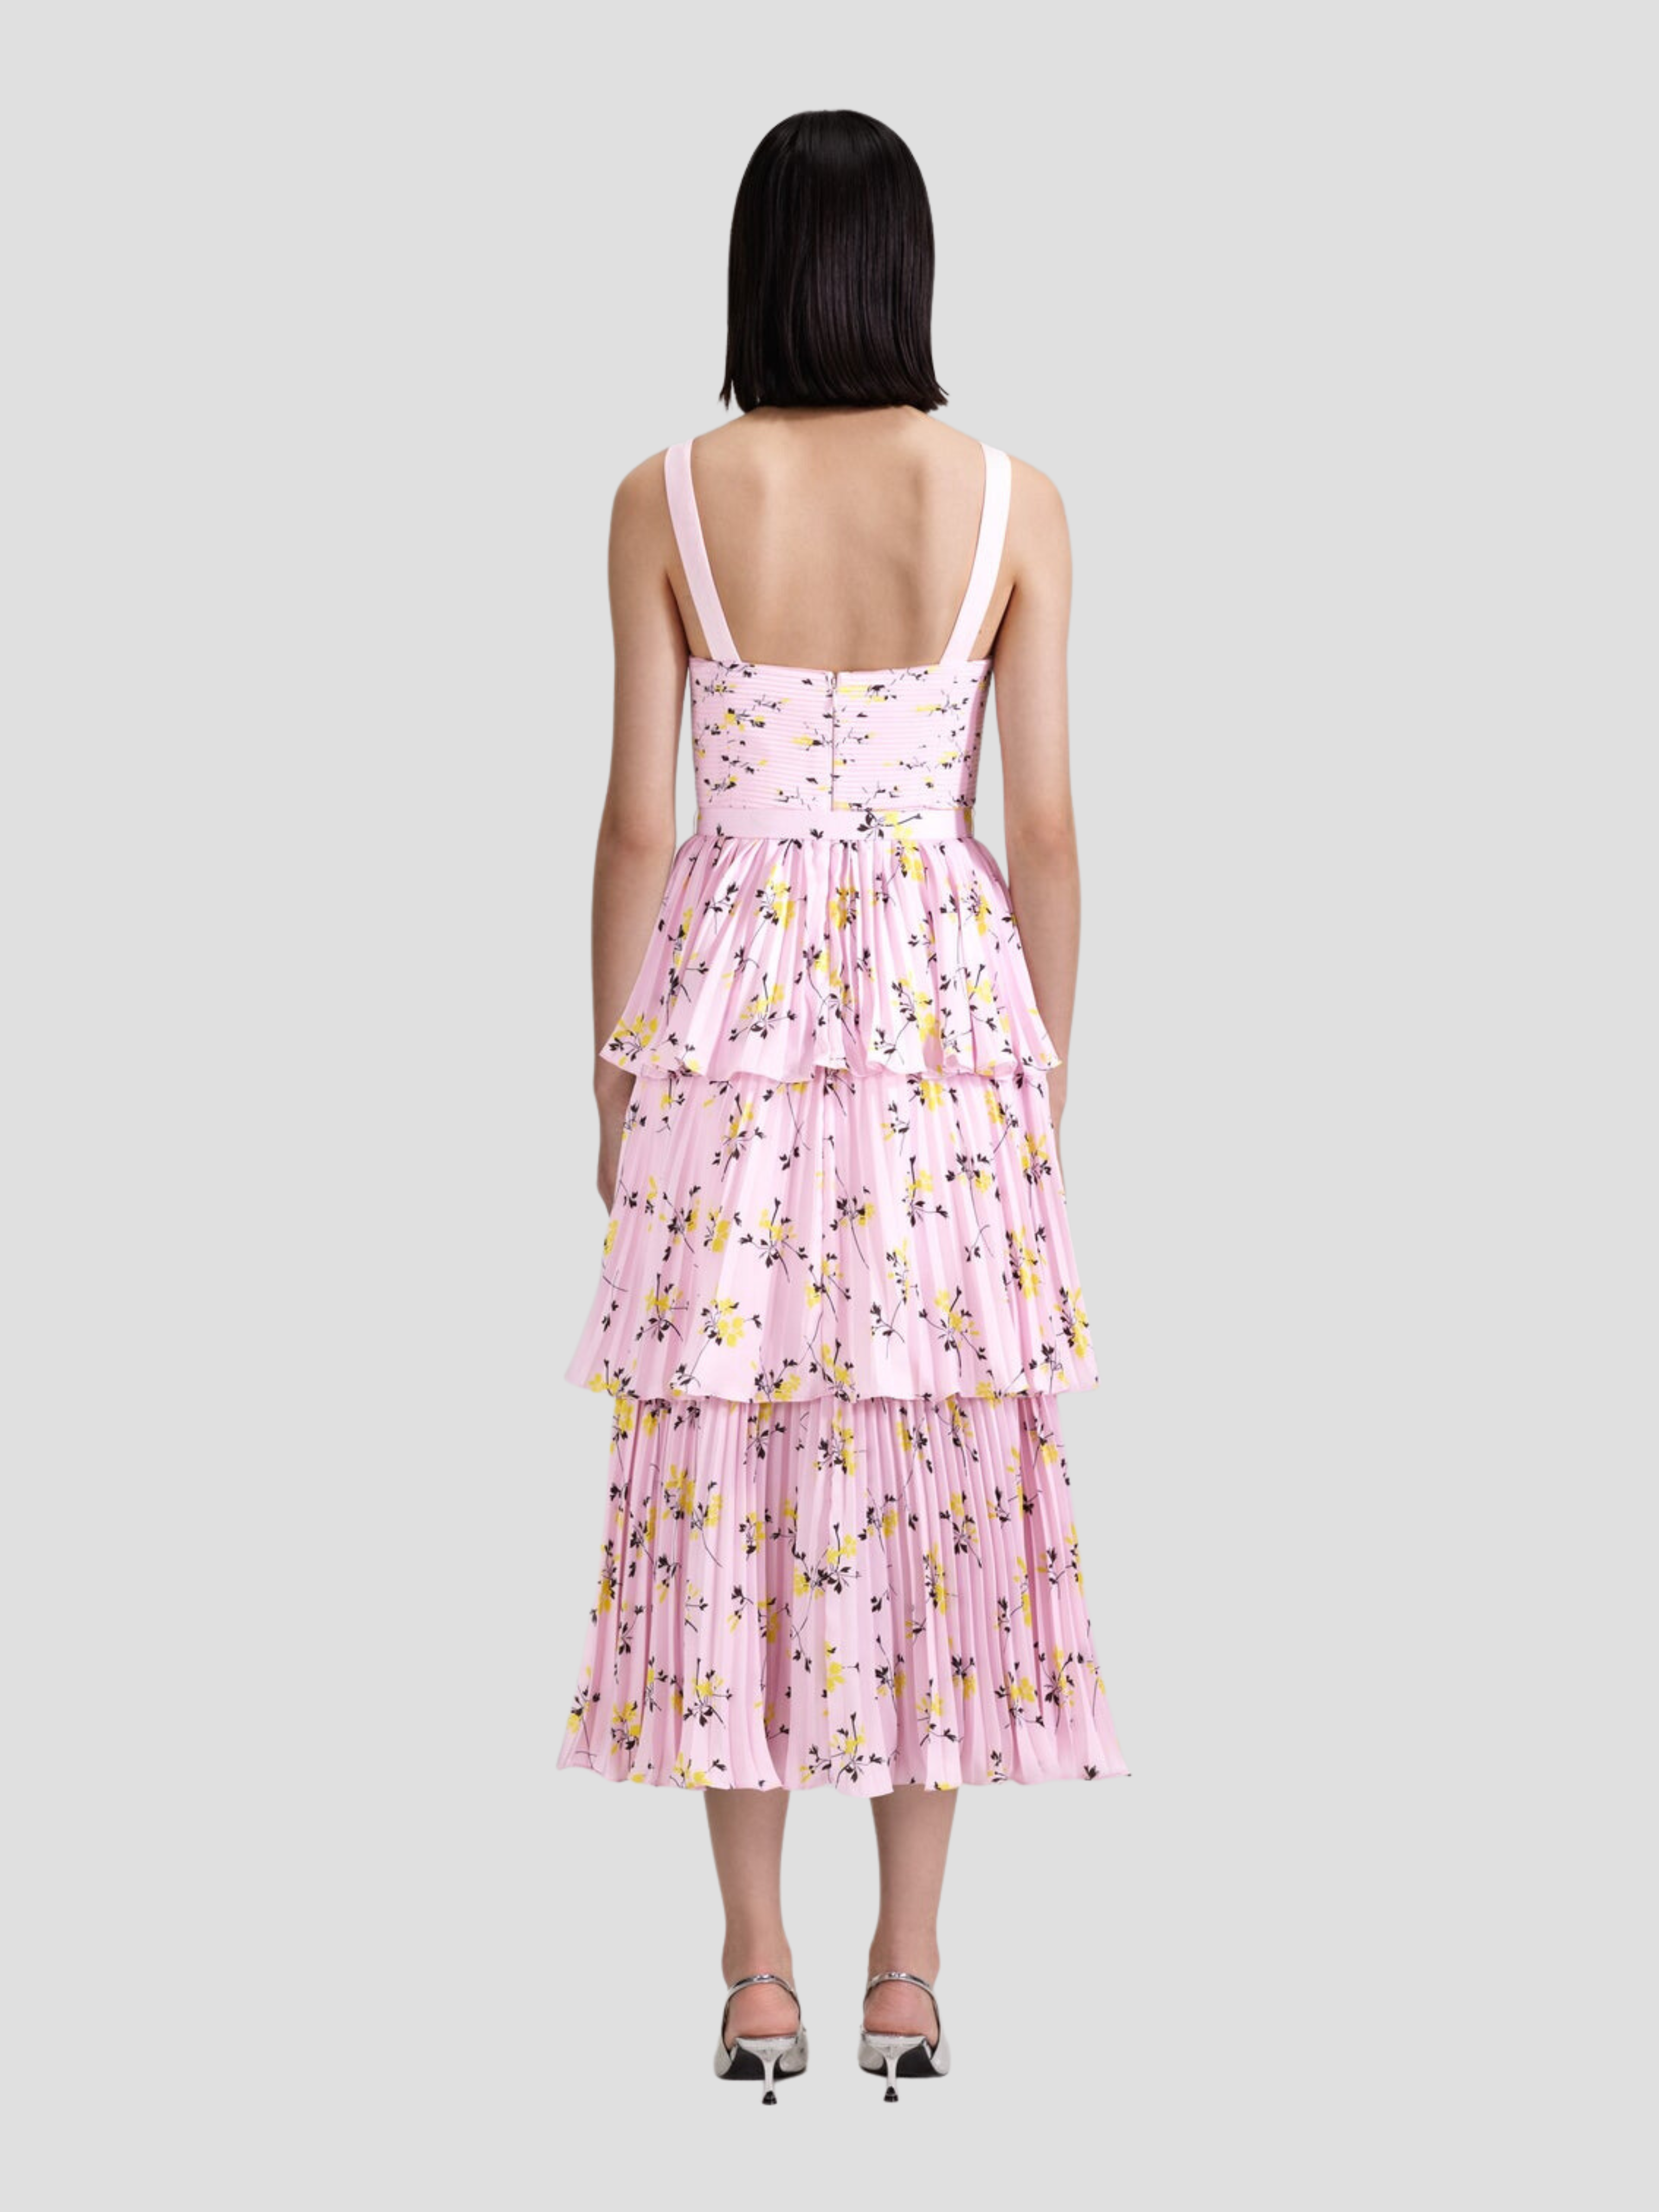 Meet your new floral dress: the Flower Power Trouser